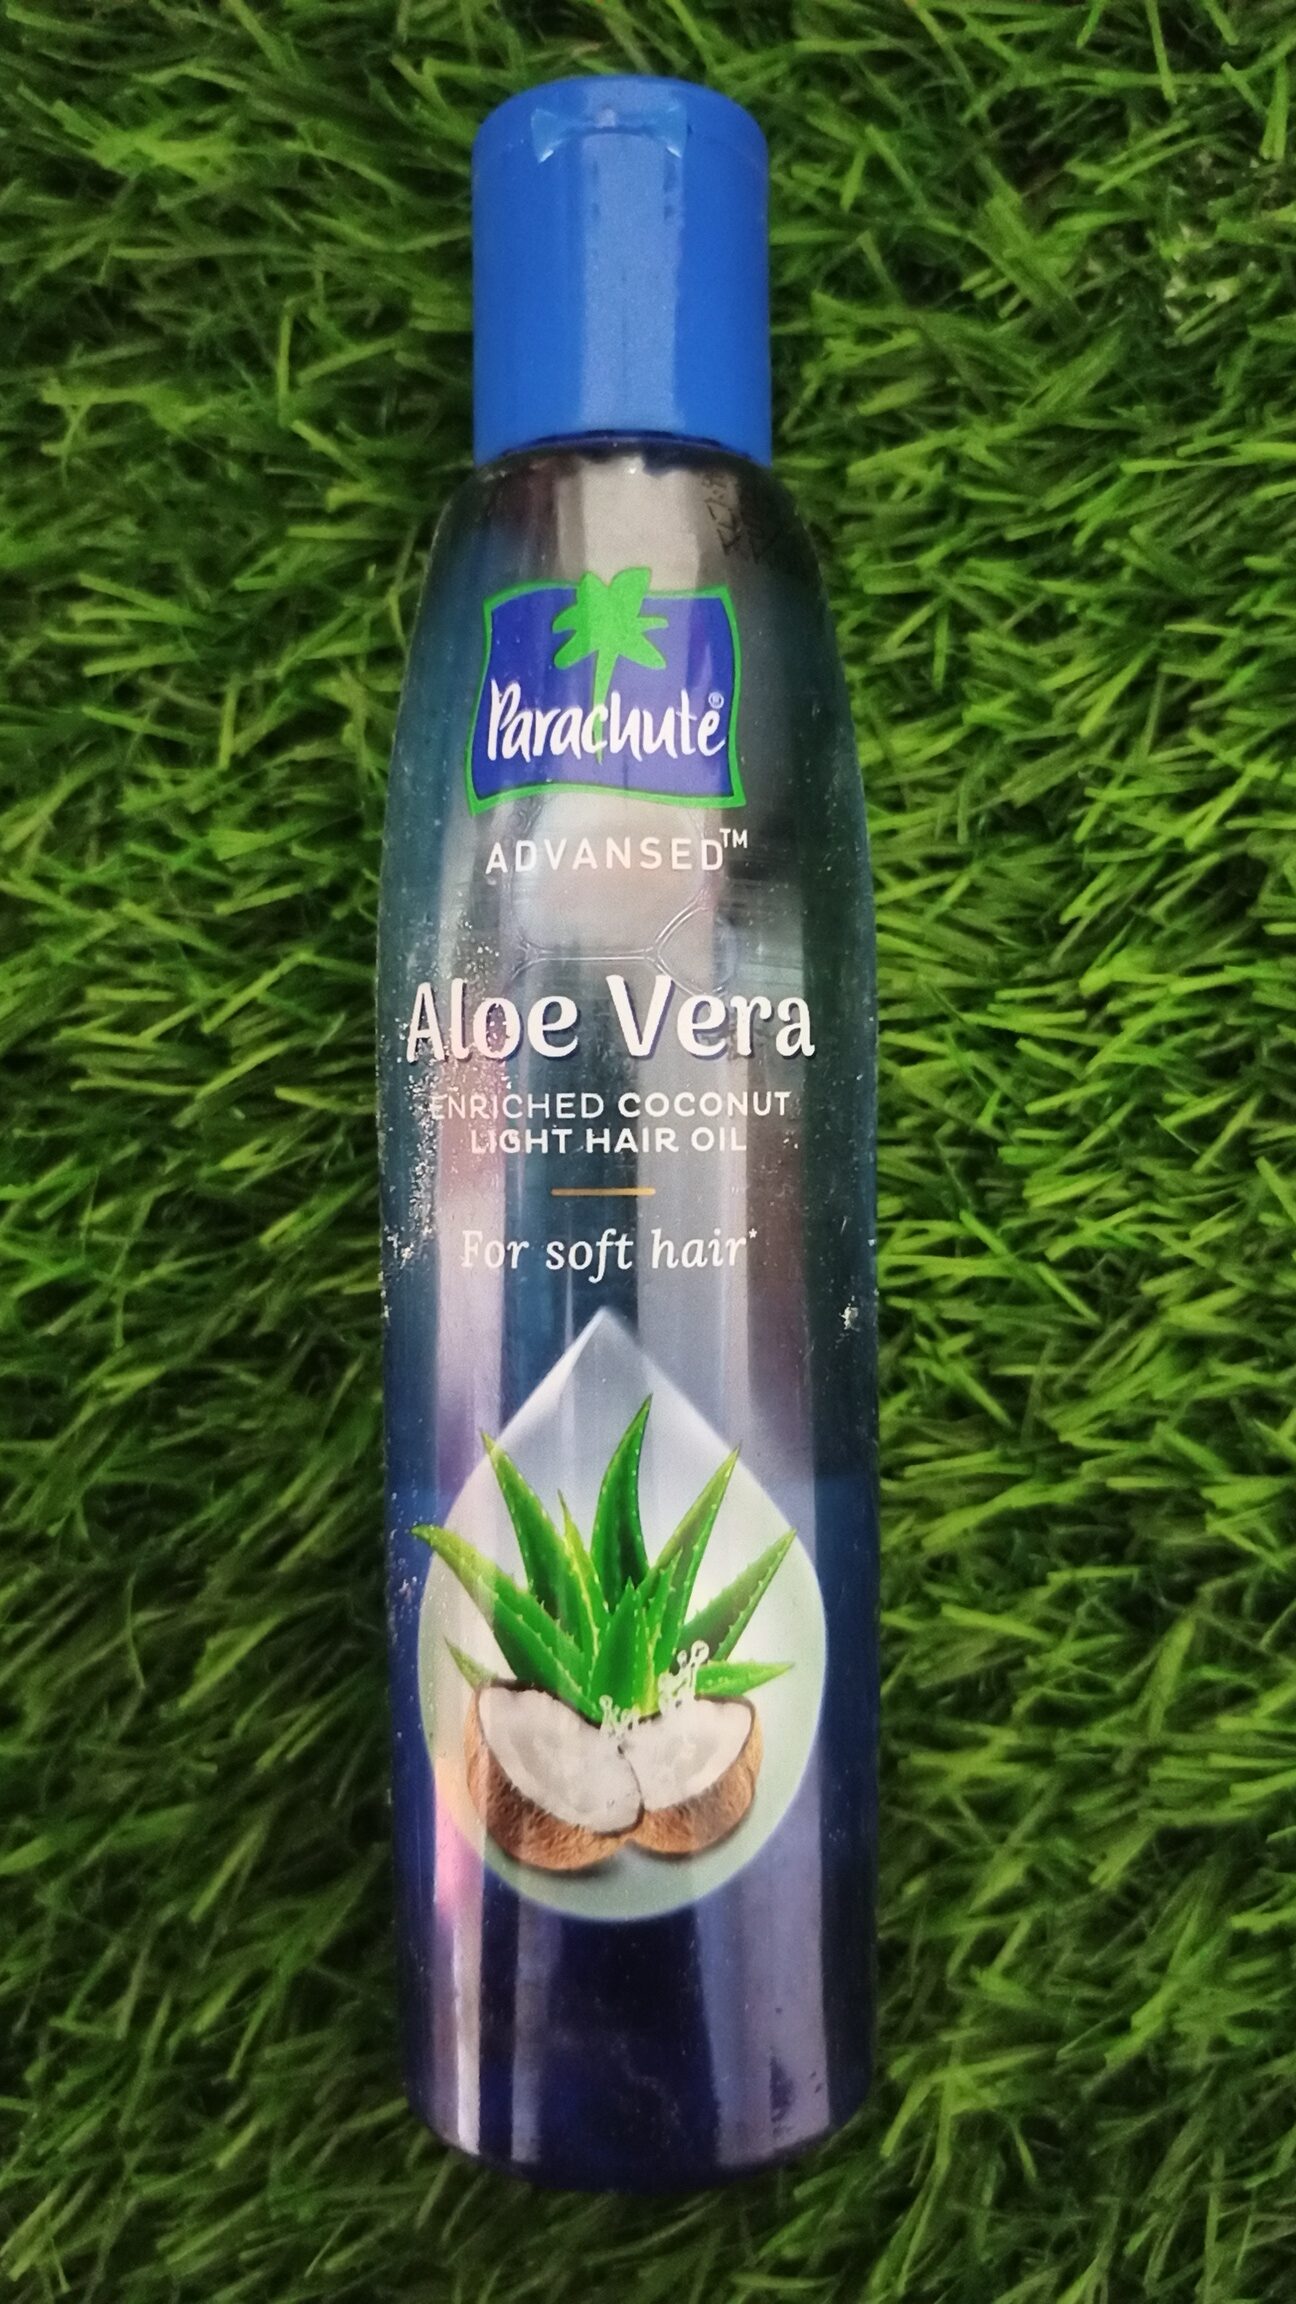 Parachute advansed aloe vera coconut hair oil review  YouTube